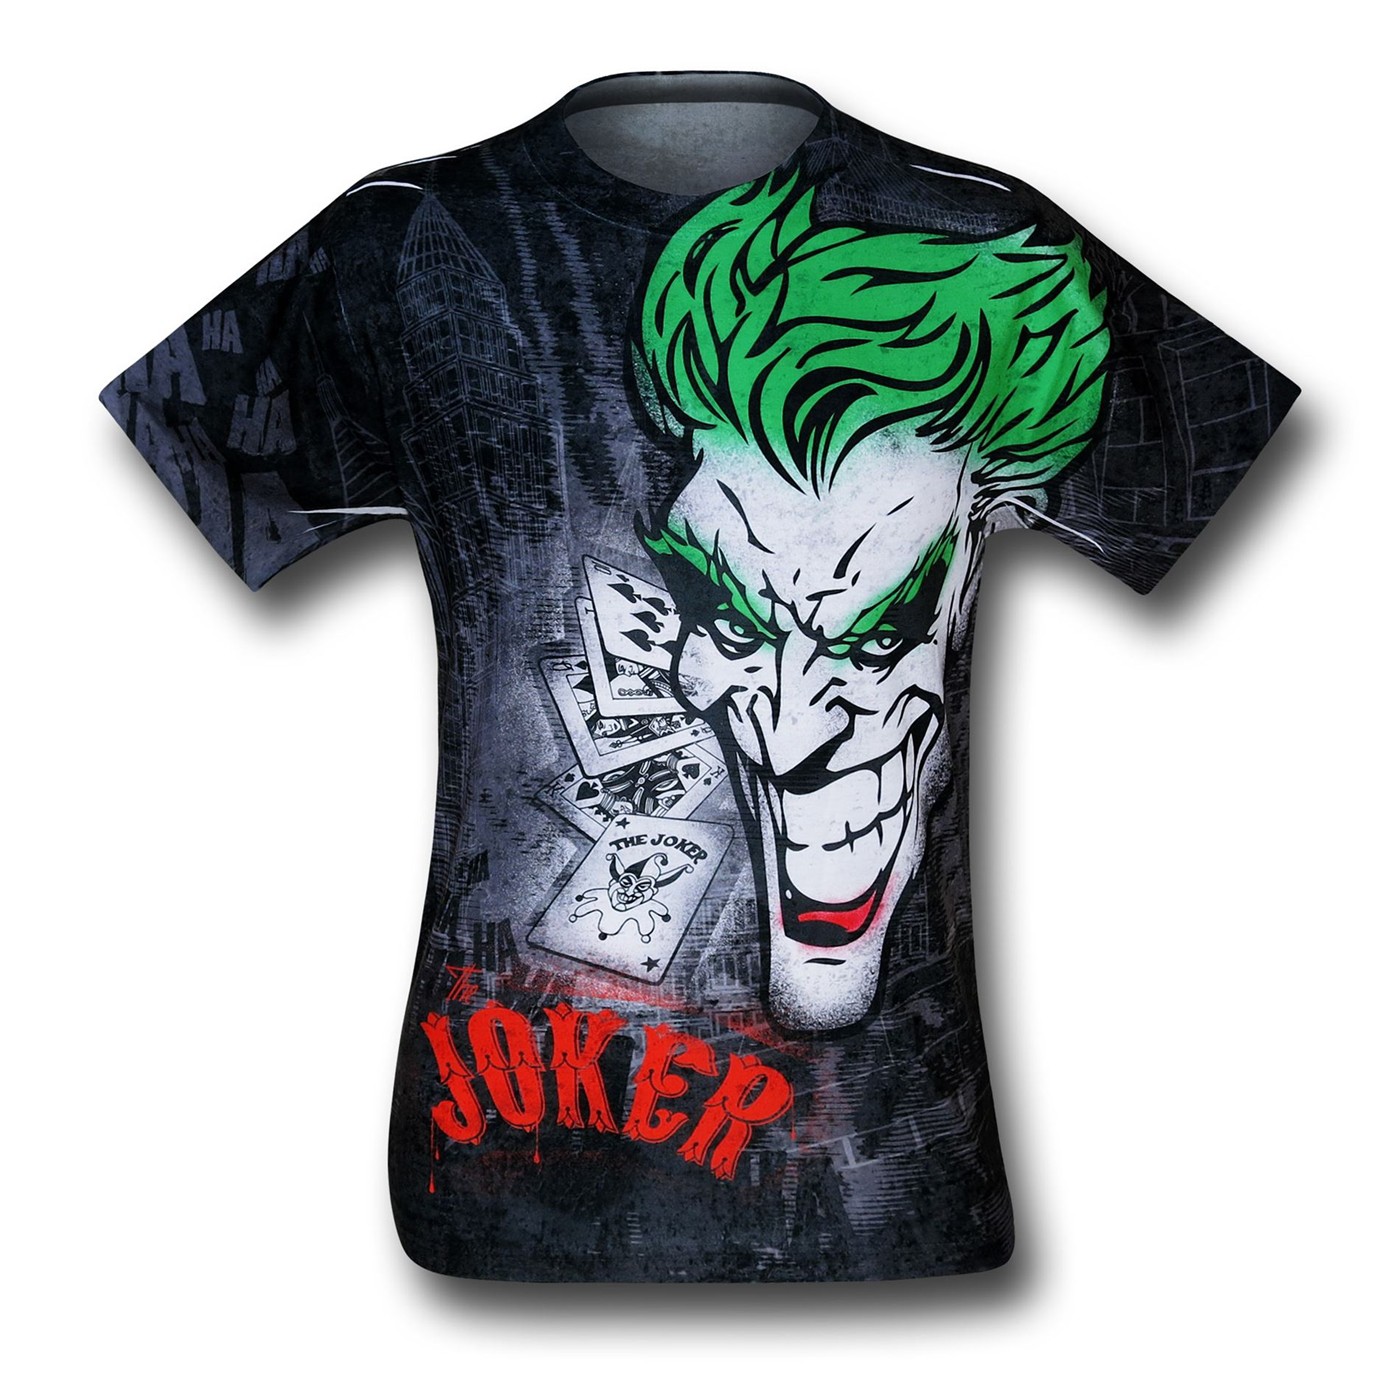 Joker Sprays the City Sublimated T-Shirt